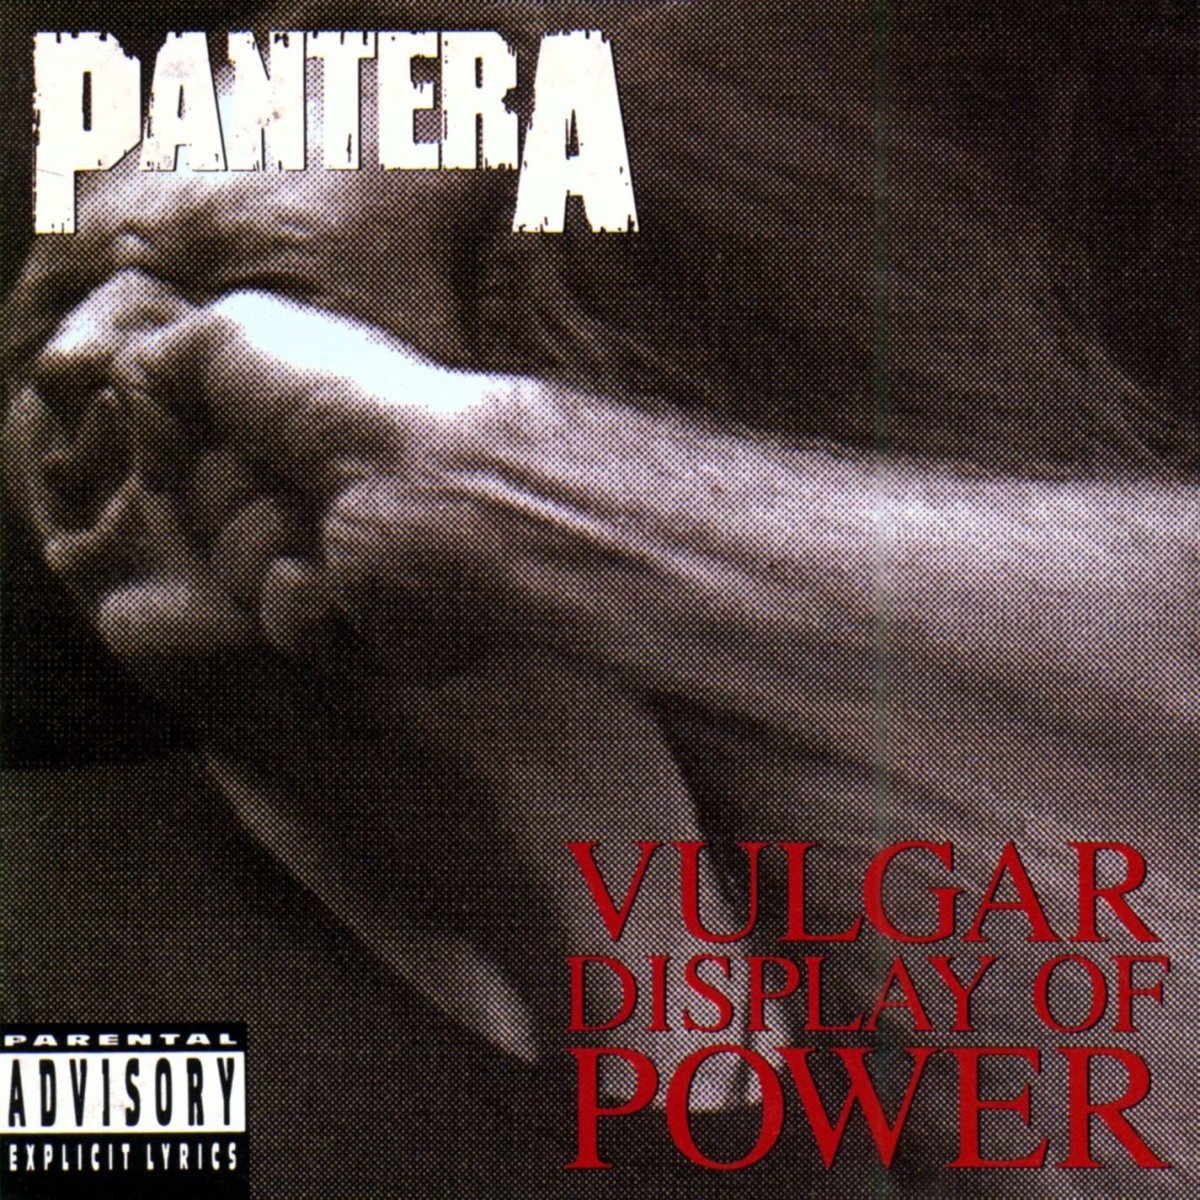 Vulgar Display of Power by Pantera: A Review